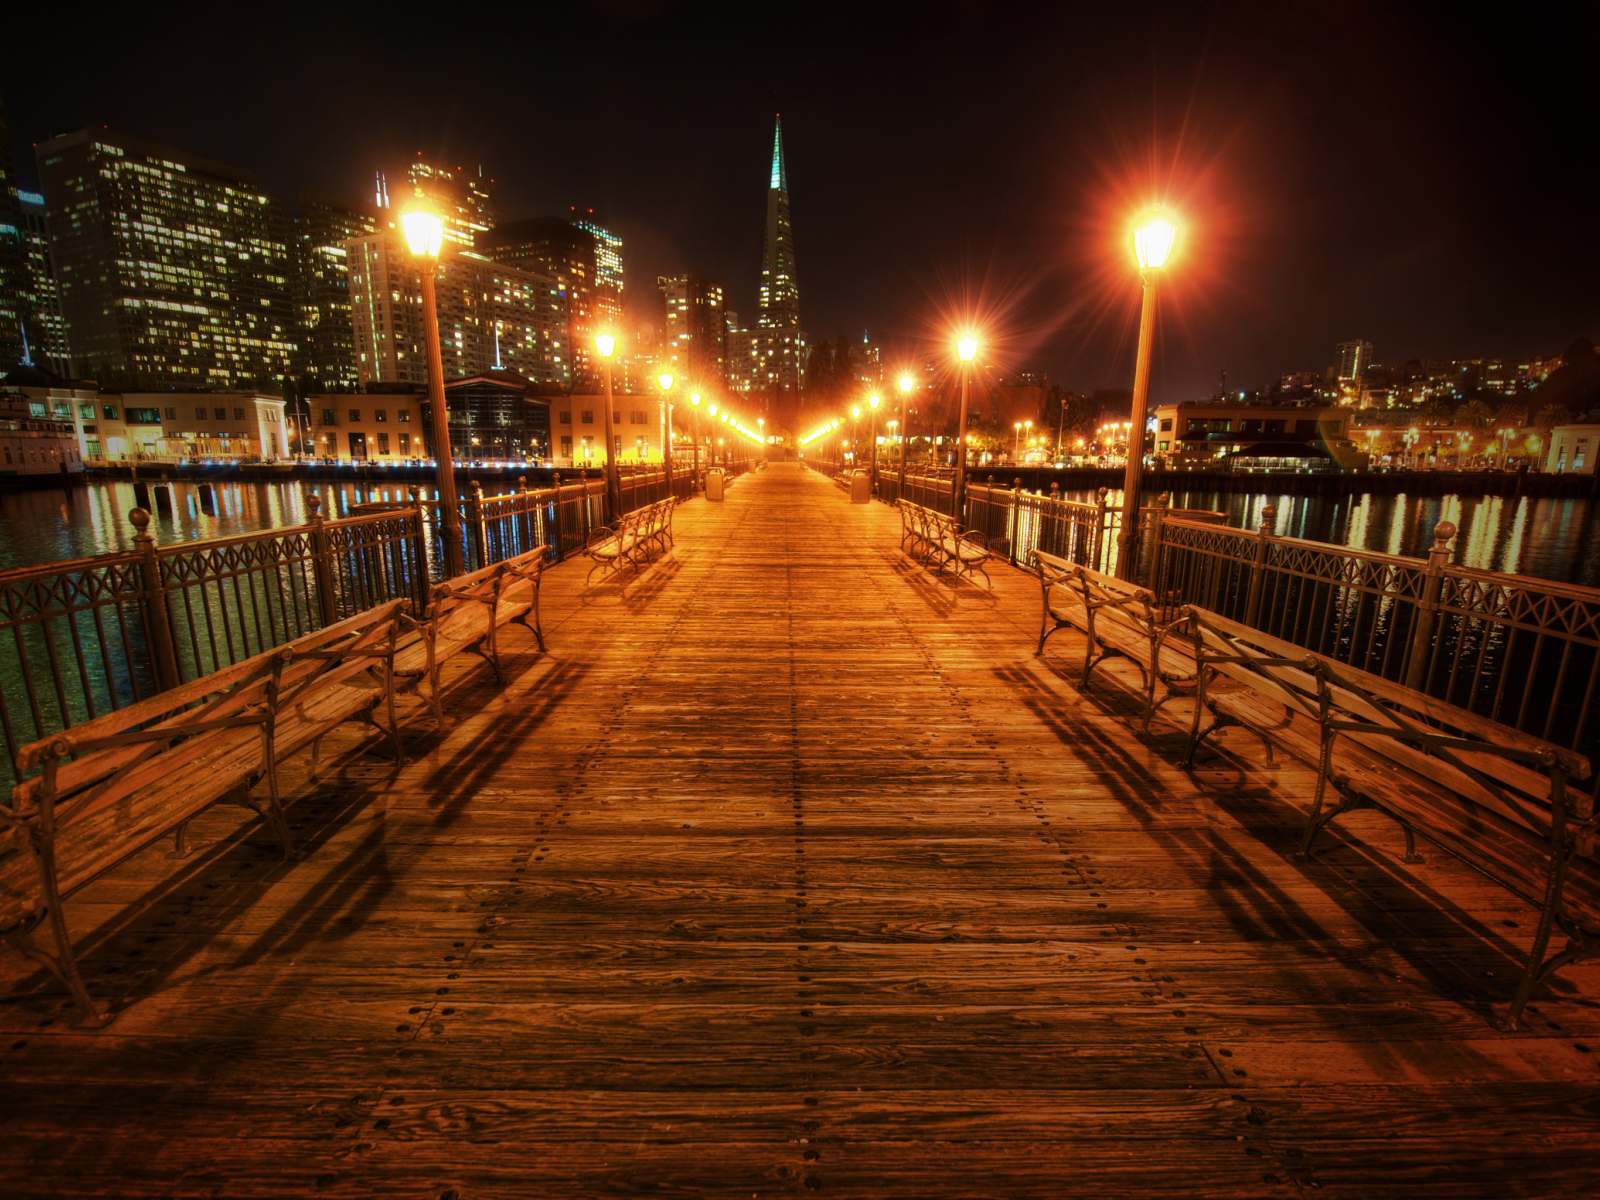 Wooden bridge in San Francisco